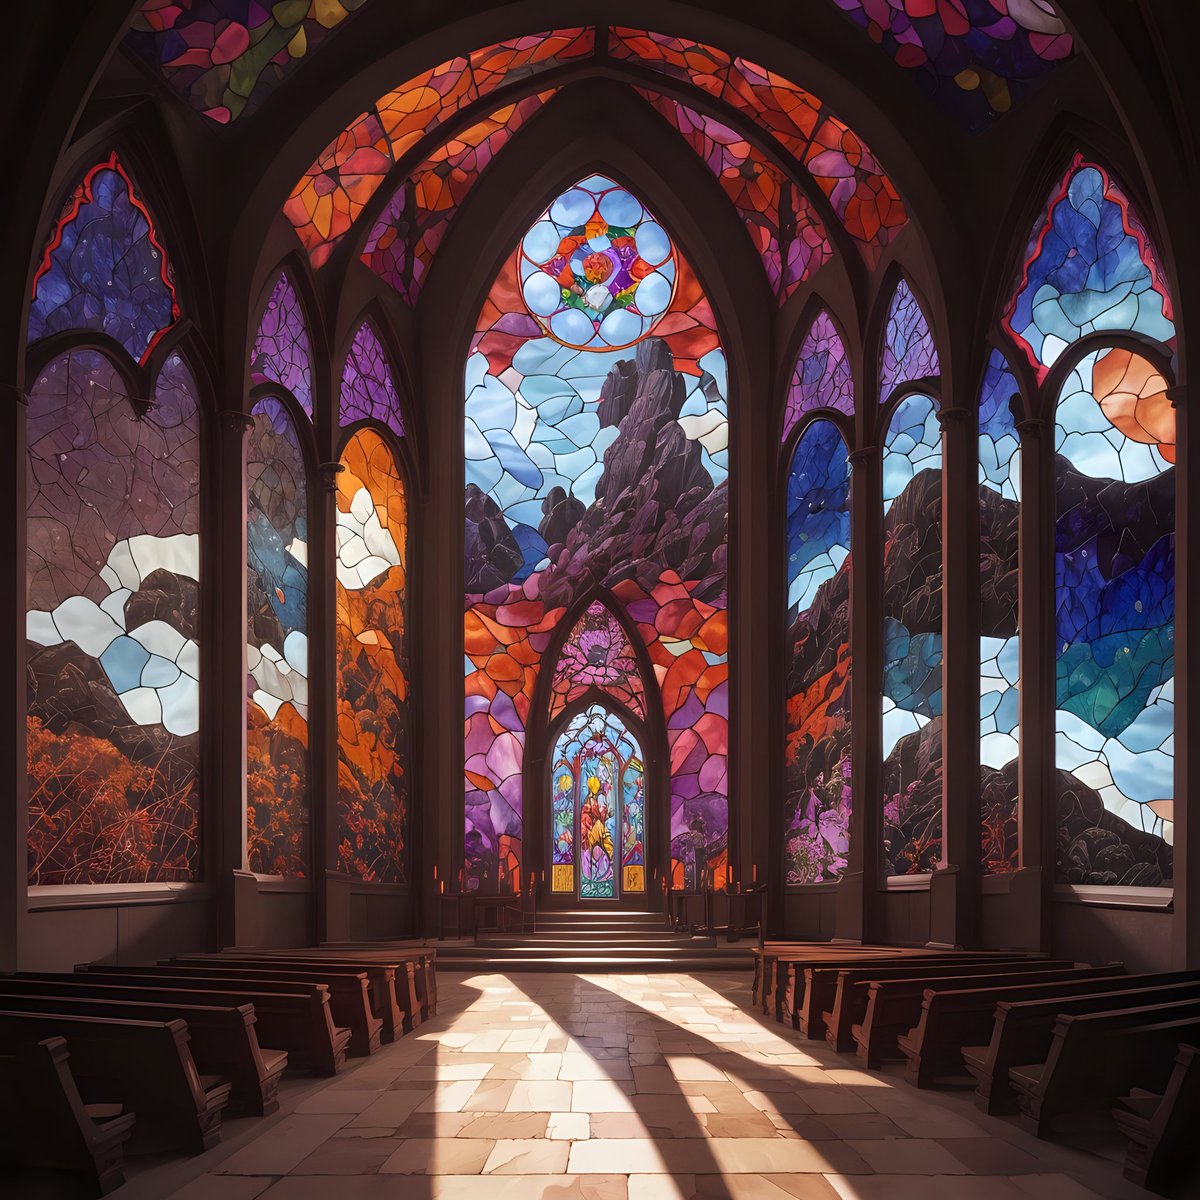 #stainedglass #aiart #church #imagine⛪🎨